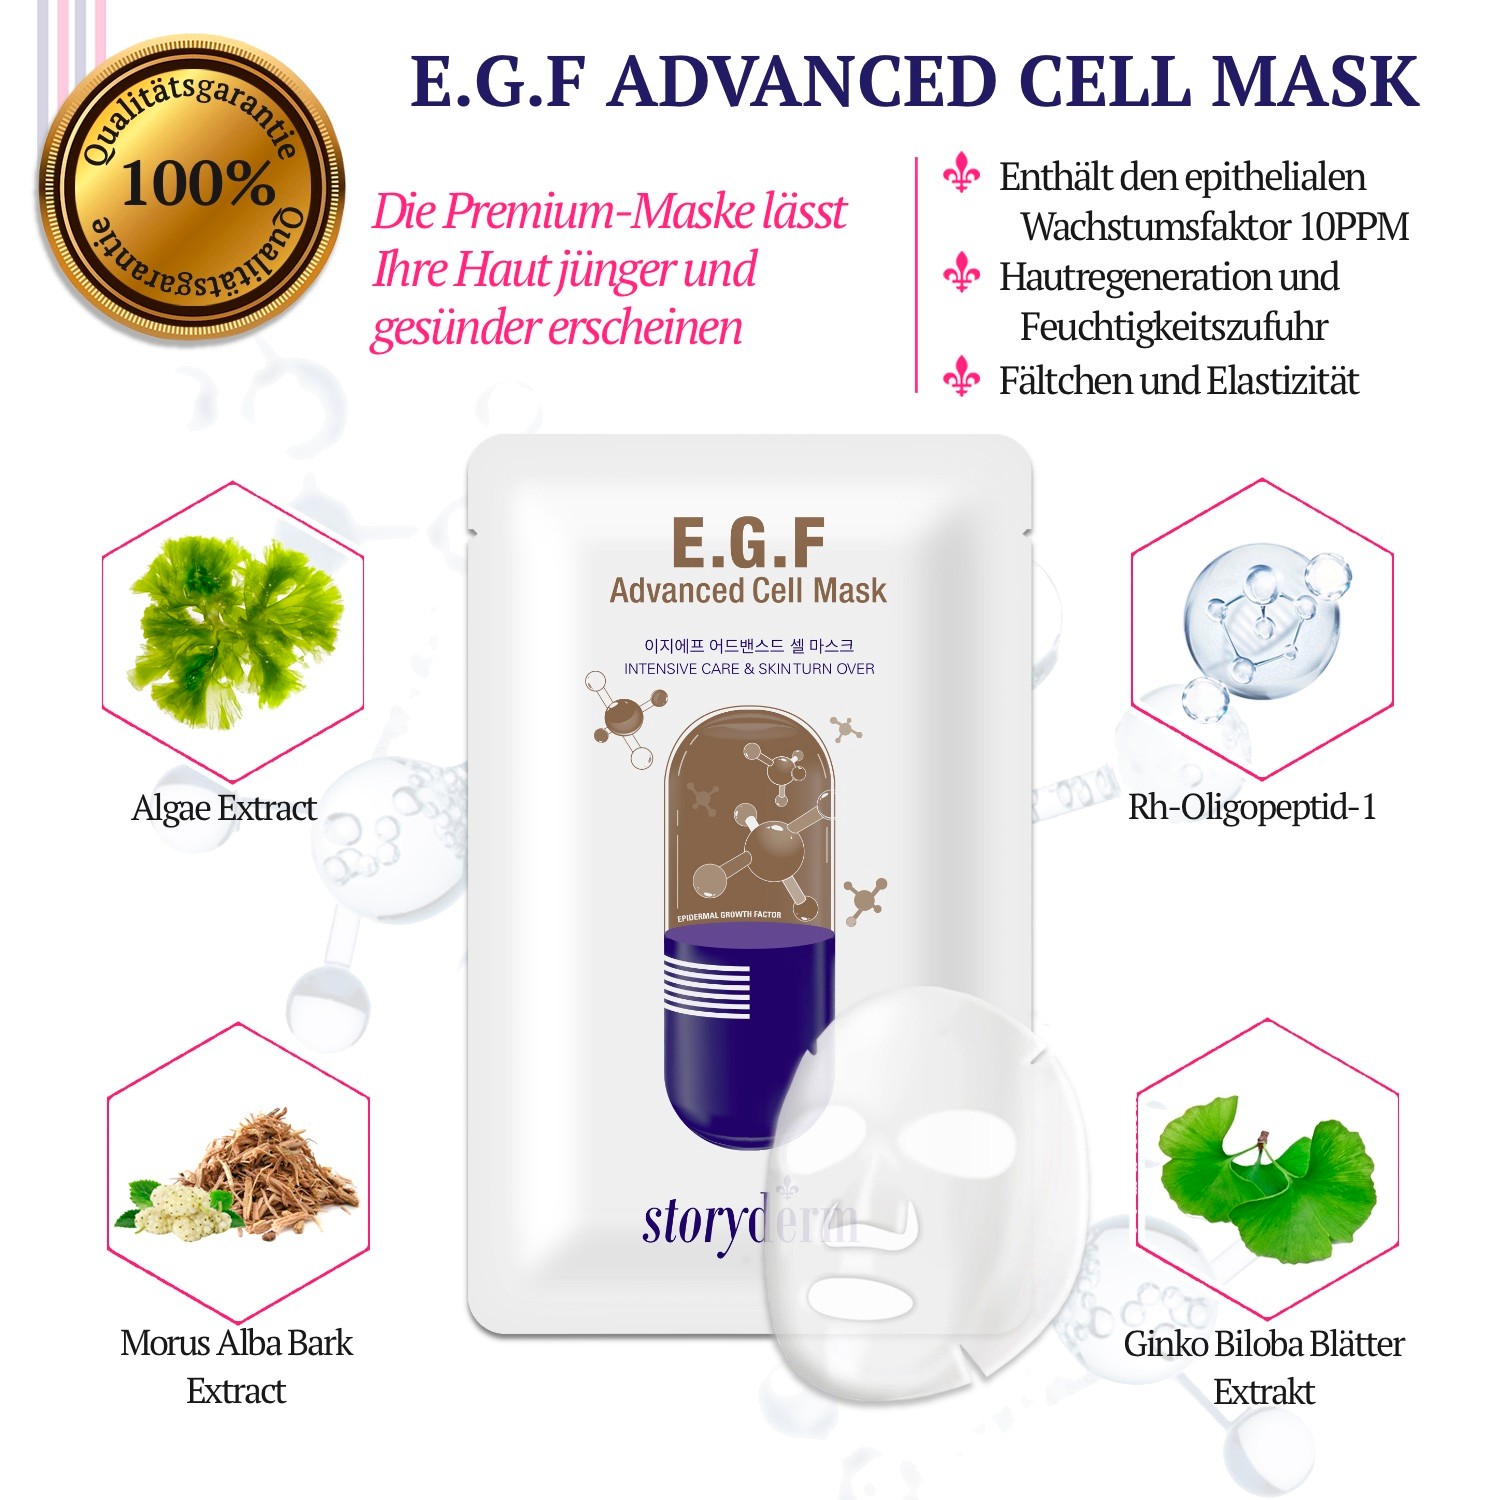 EGF ADVANCED CELL MASK